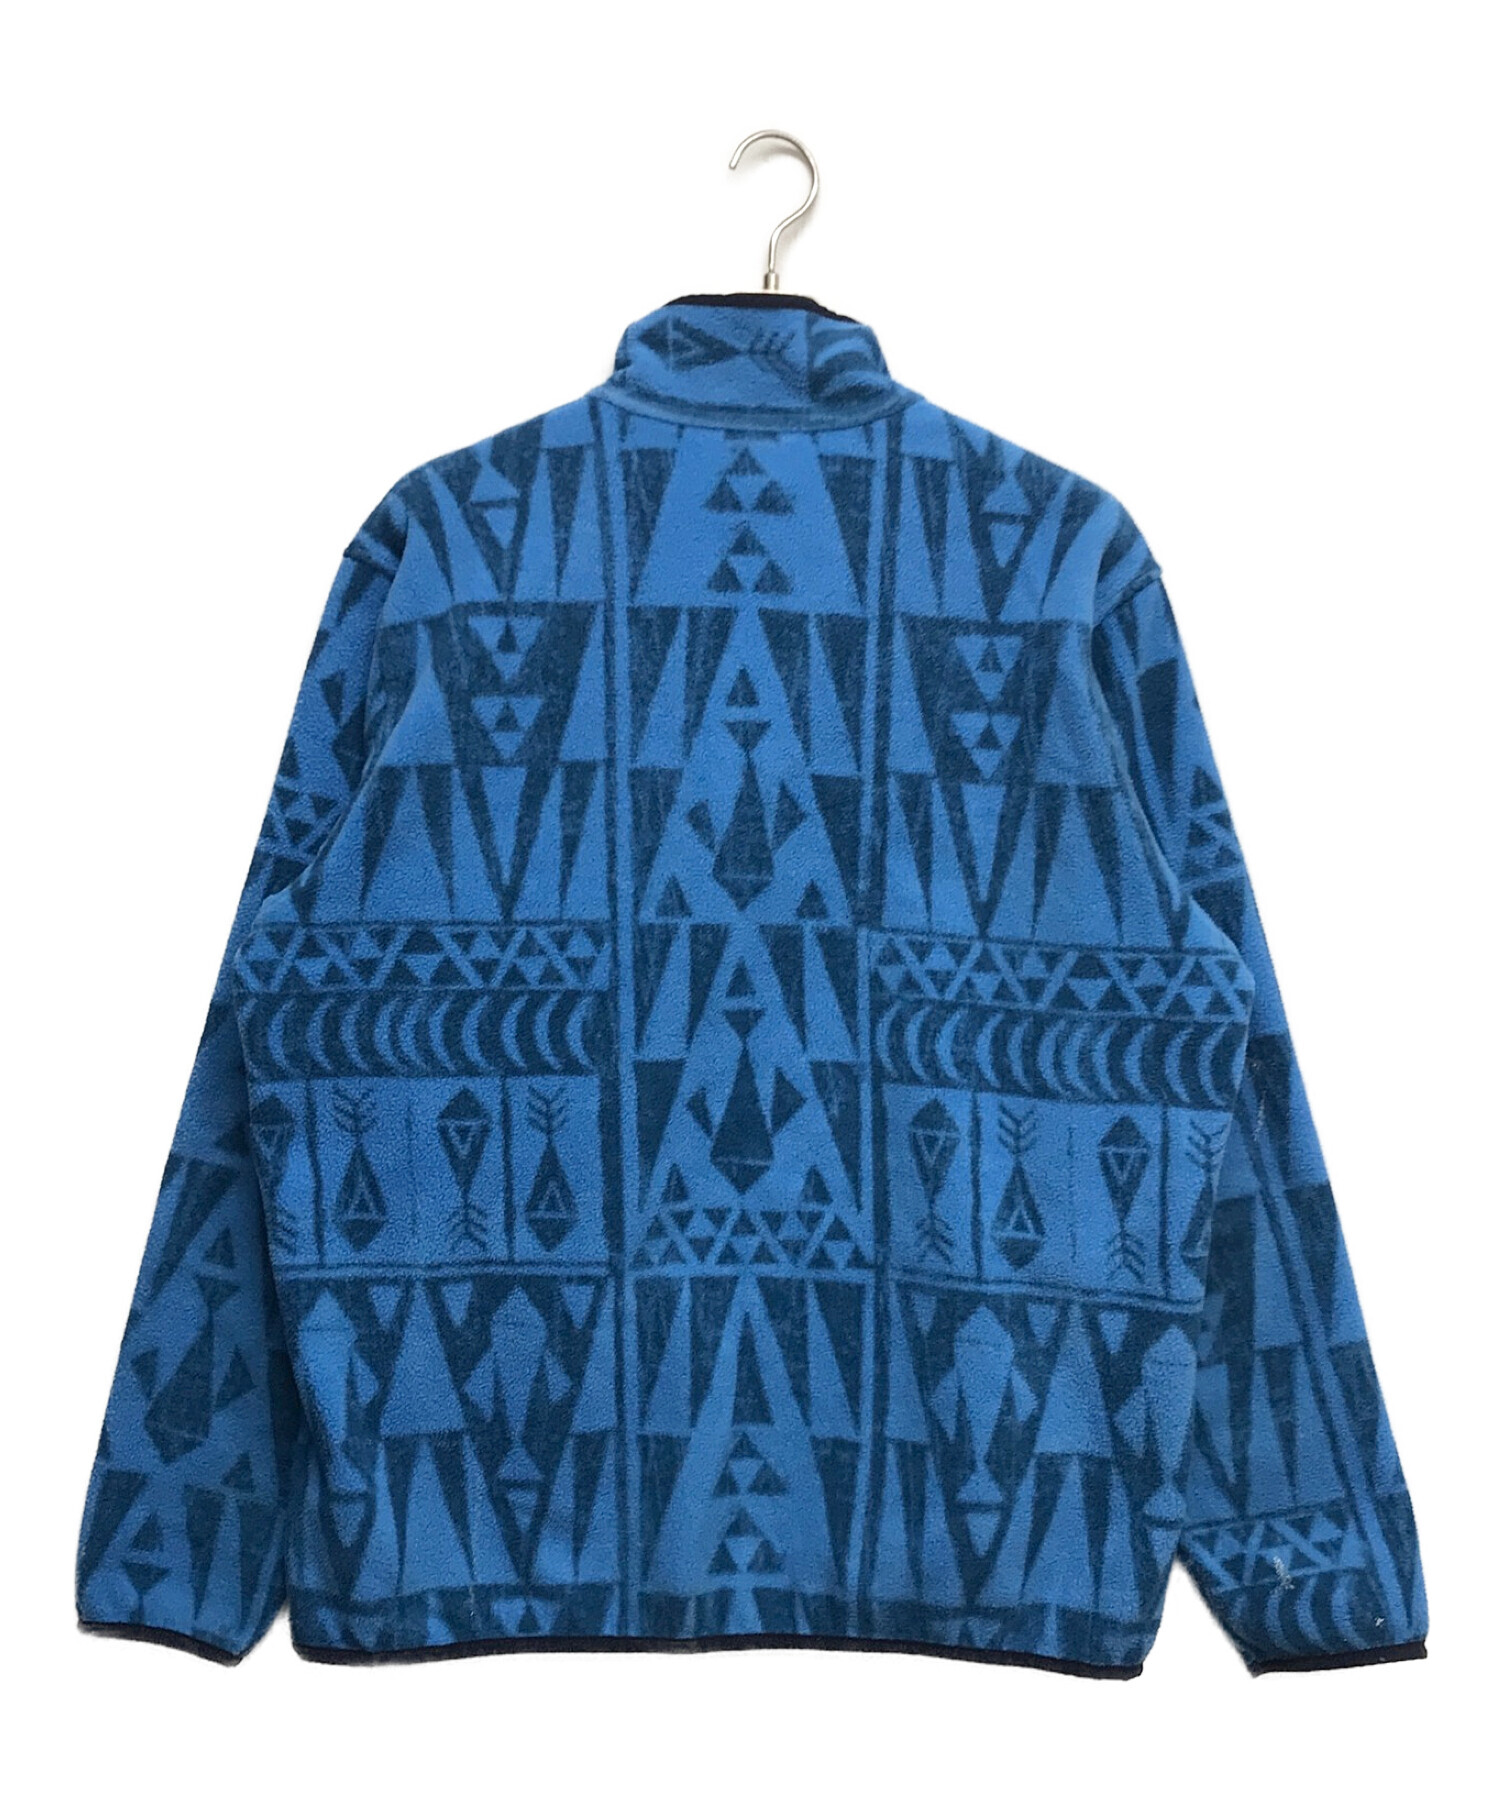 Patagonia (パタゴニア) フリースプルオーバージャケット ブルー サイズ:XL